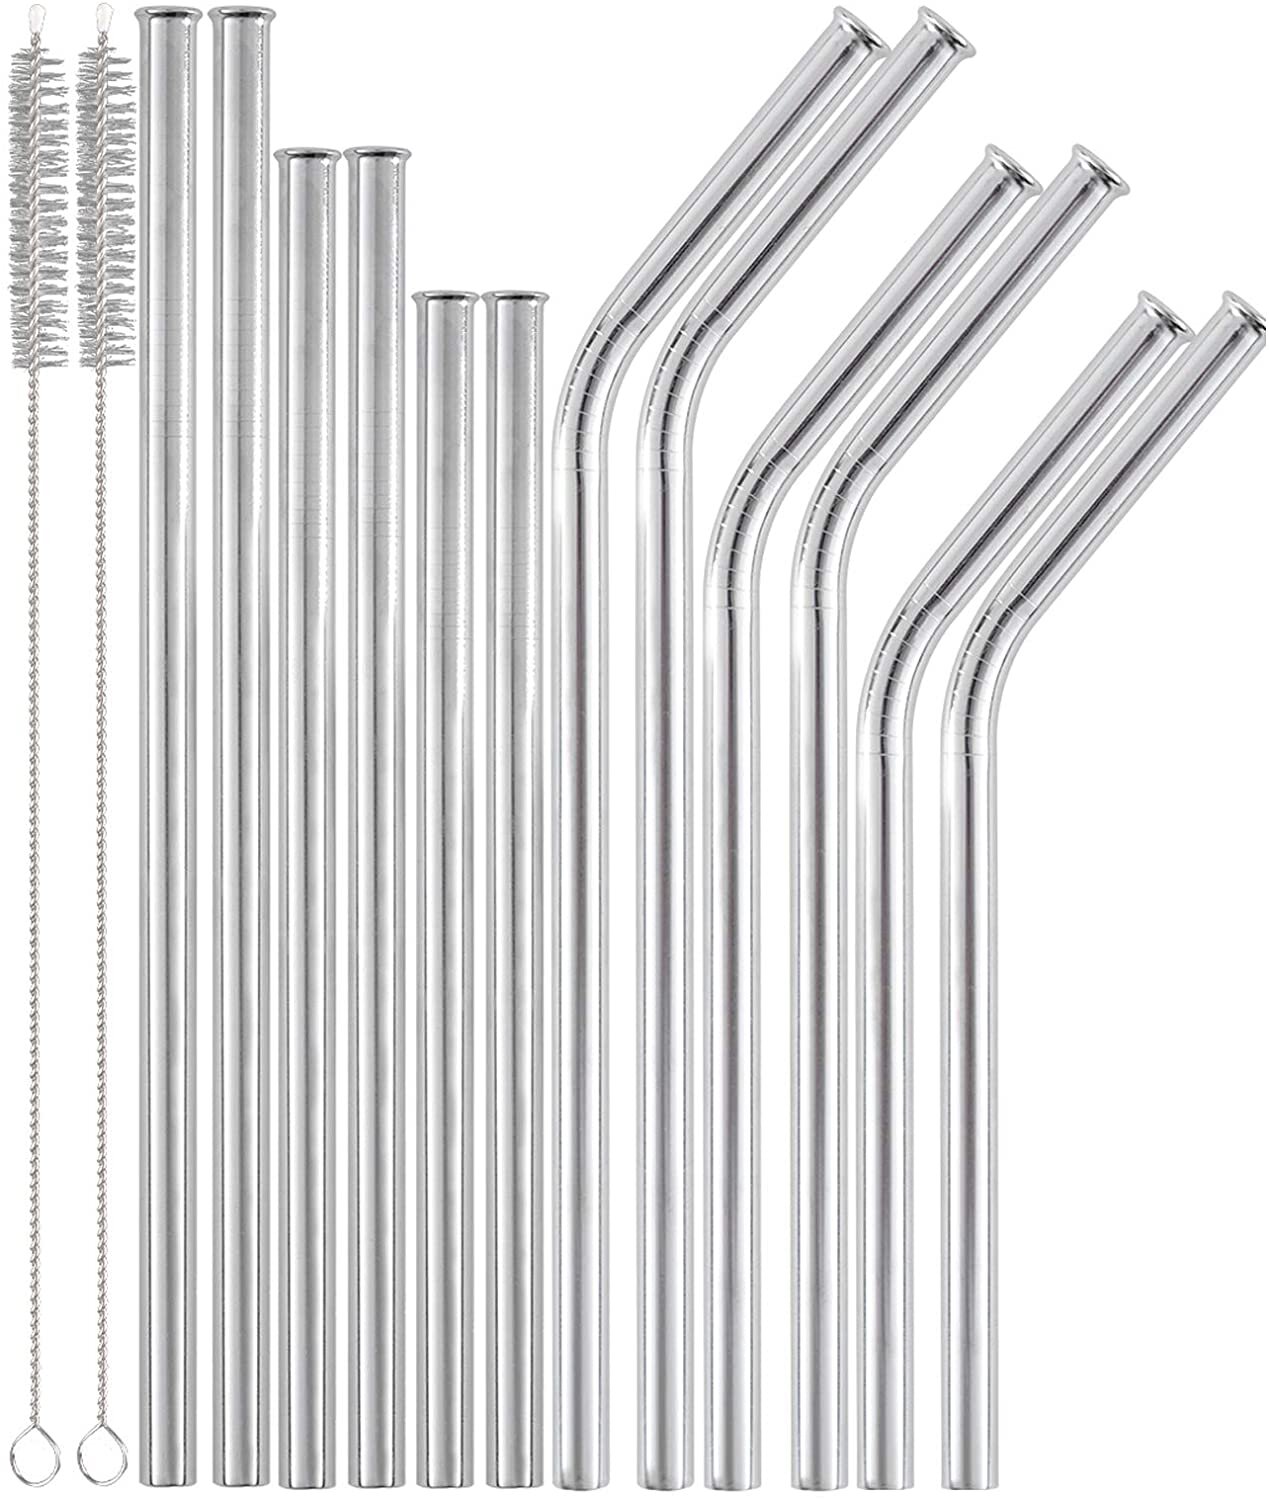 Stainless Steel Straws.jpg